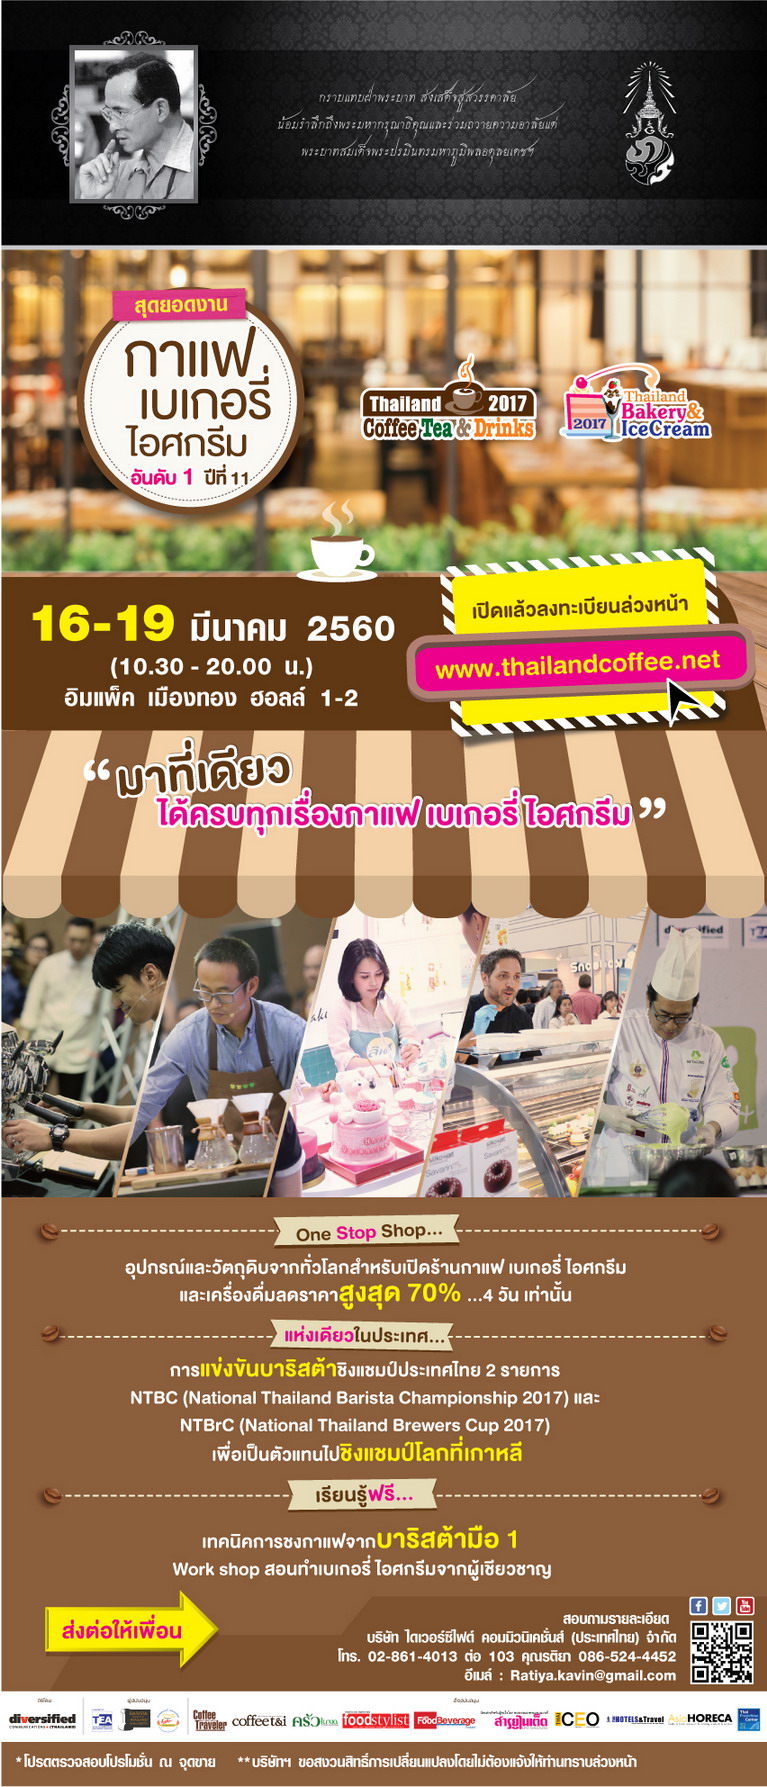 Thailand Bakery & Ice Cream (11th edition)